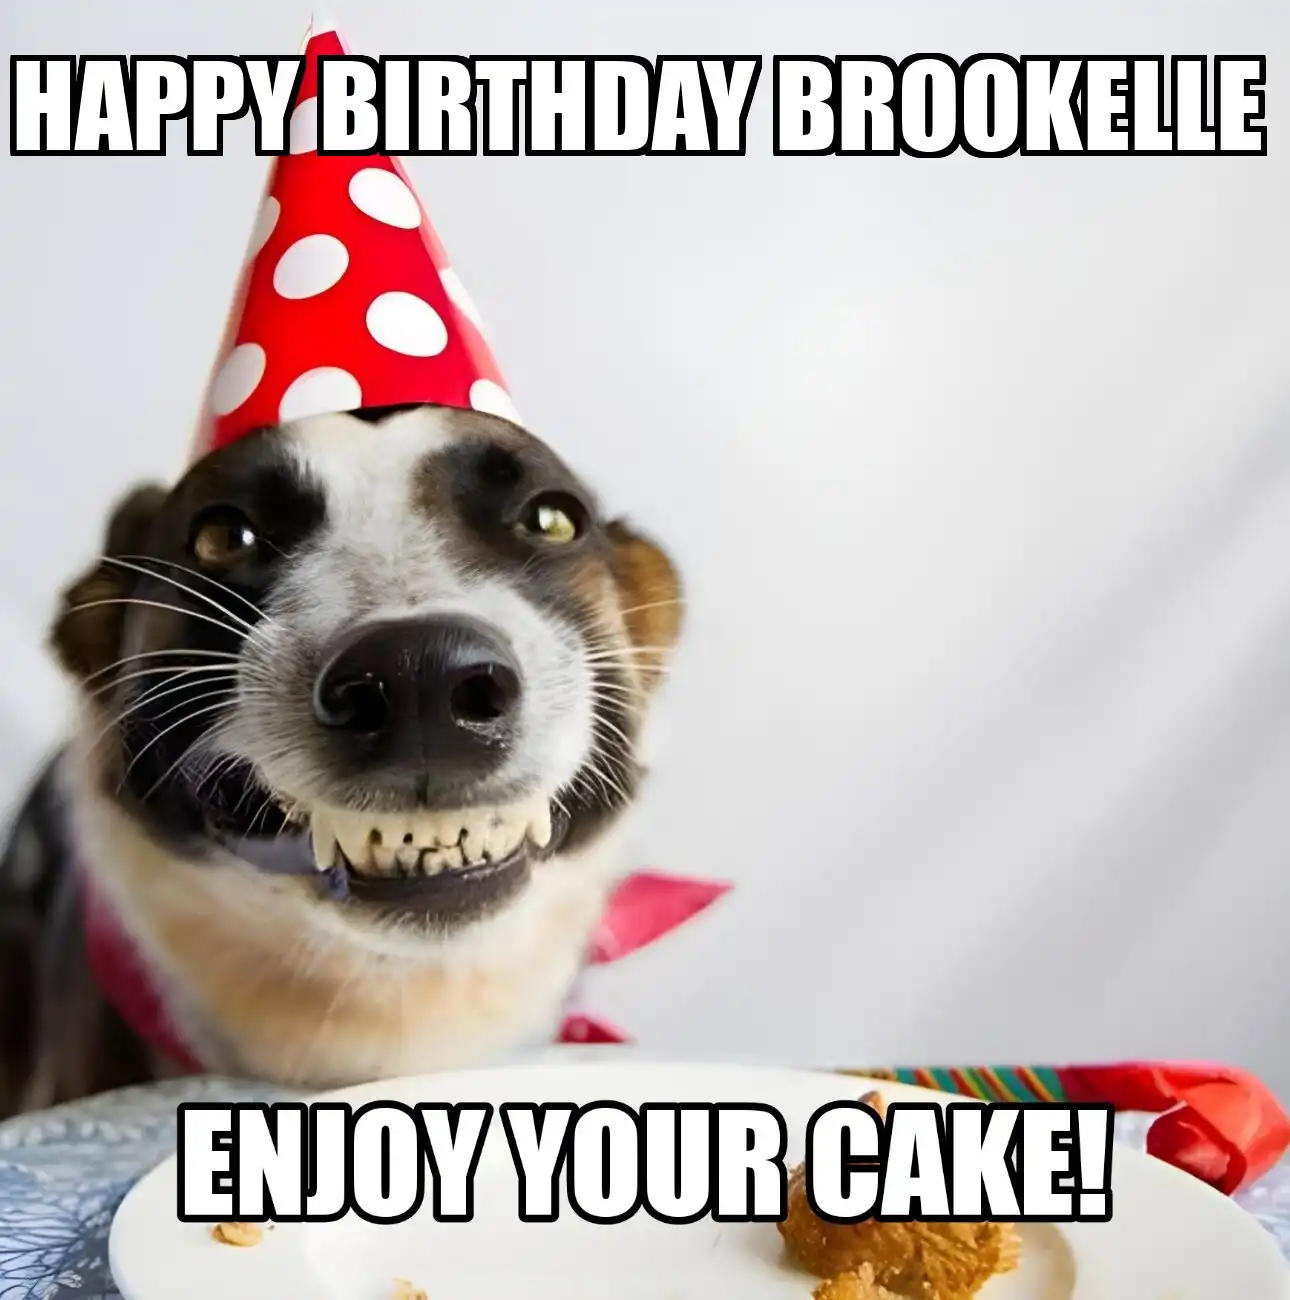 Happy Birthday Brookelle Enjoy Your Cake Dog Meme